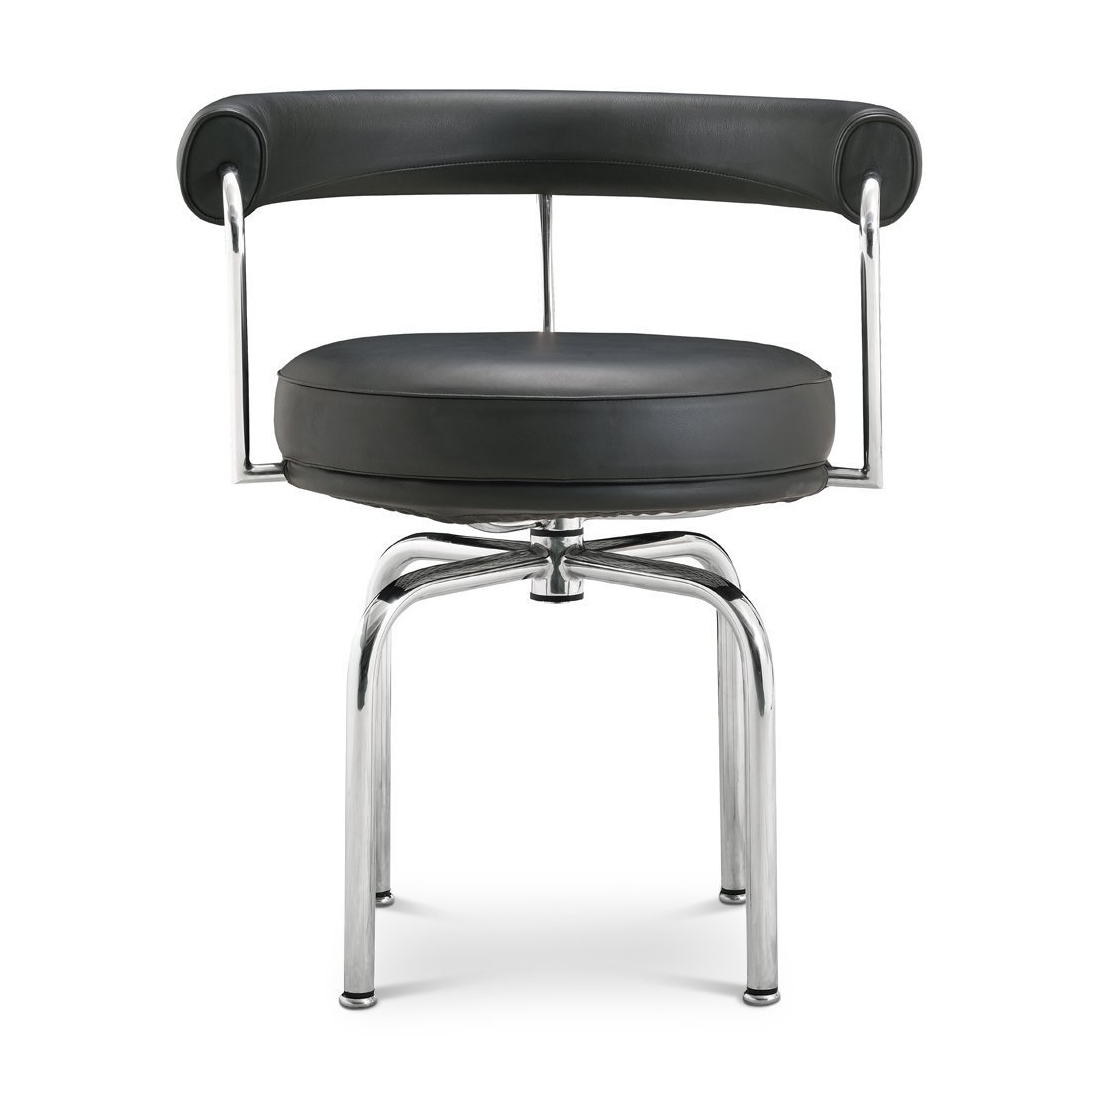 Le Corbusier Lc7 Chair - Eternity Modern